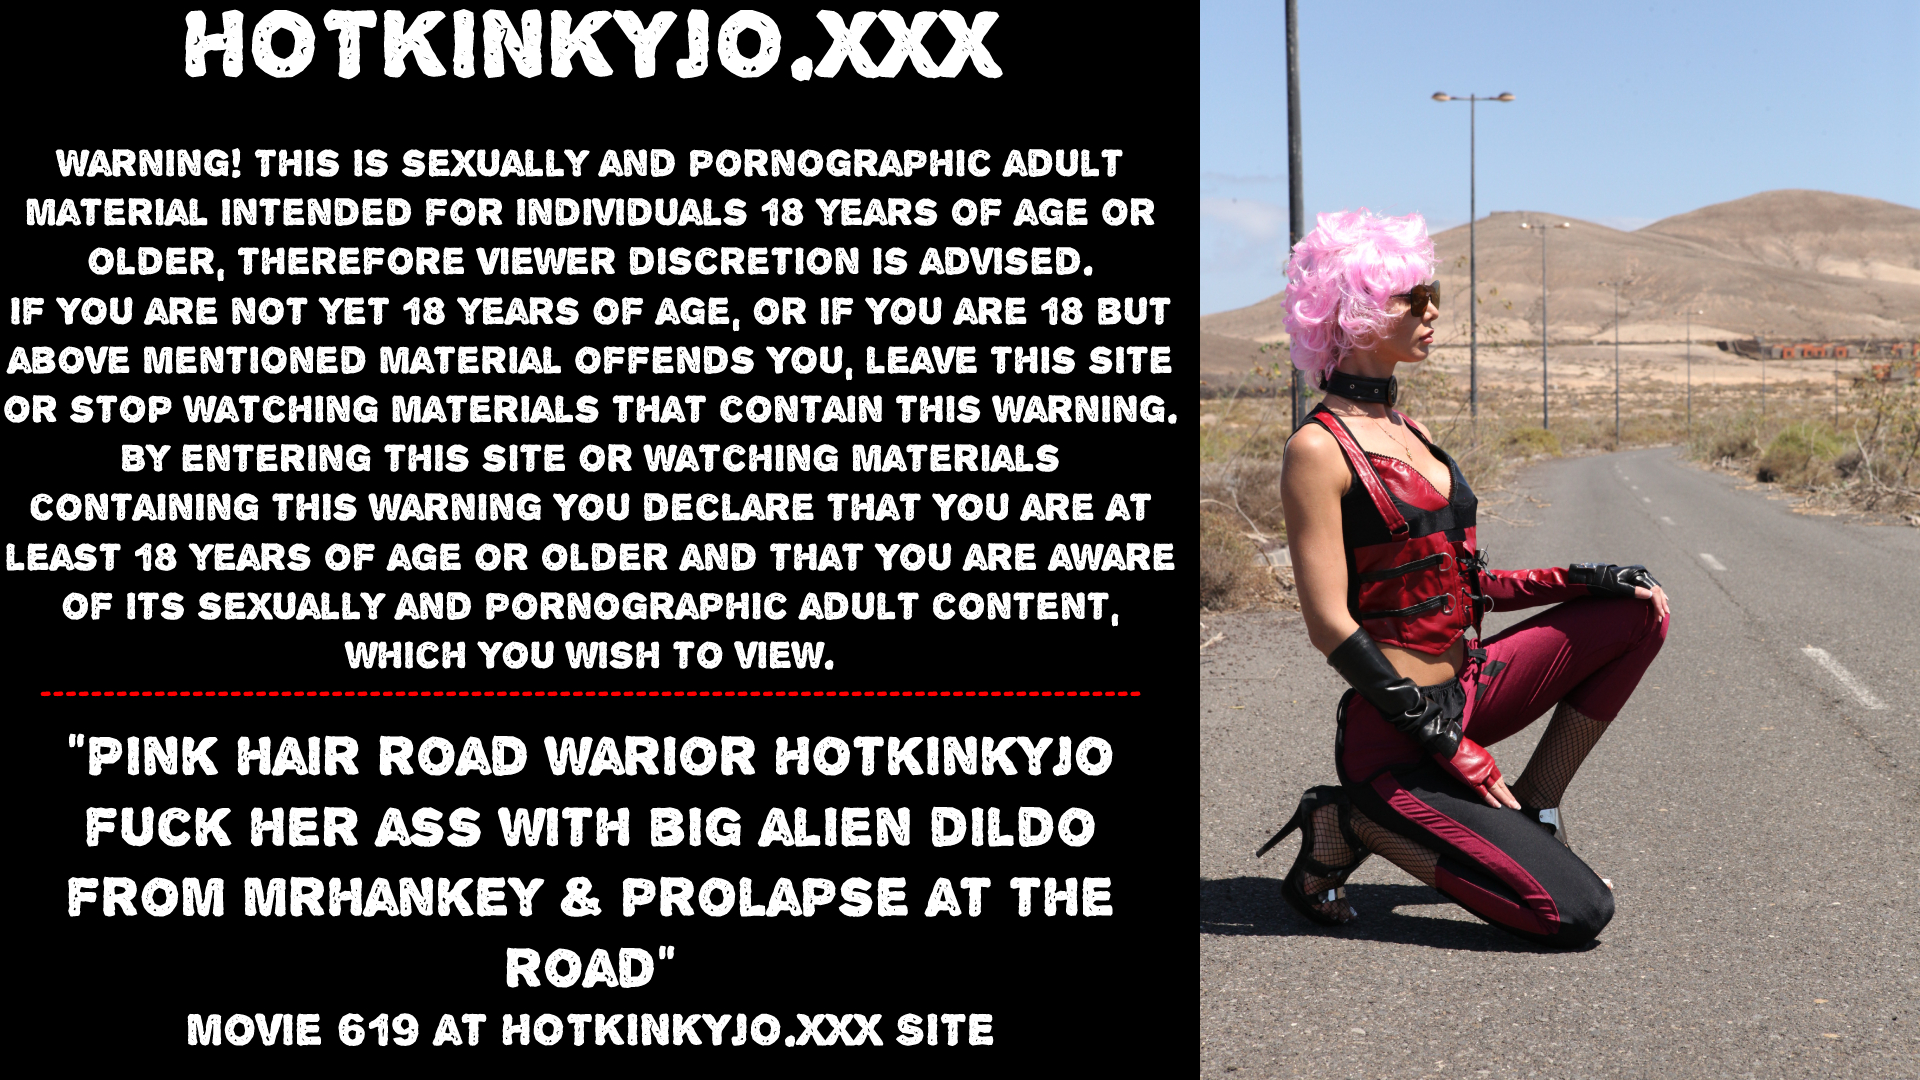 Pink hair road warior Hotkinkyjo fuck ass with dildo